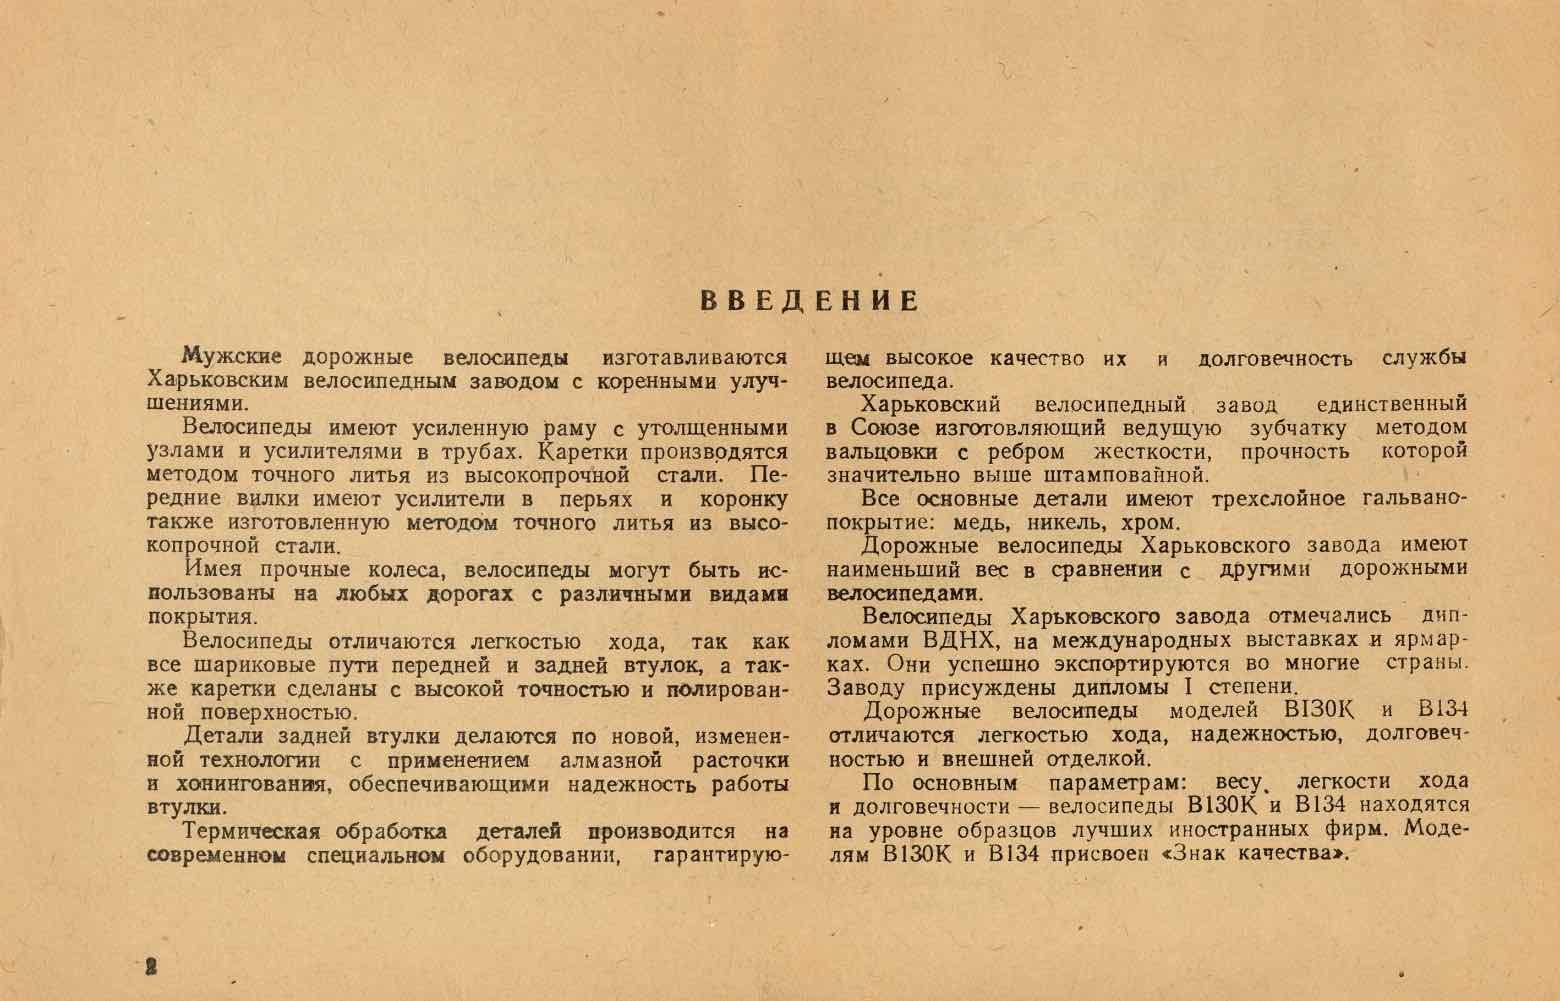 Kharkov - instructions for B130K & B134 - page 2 main image